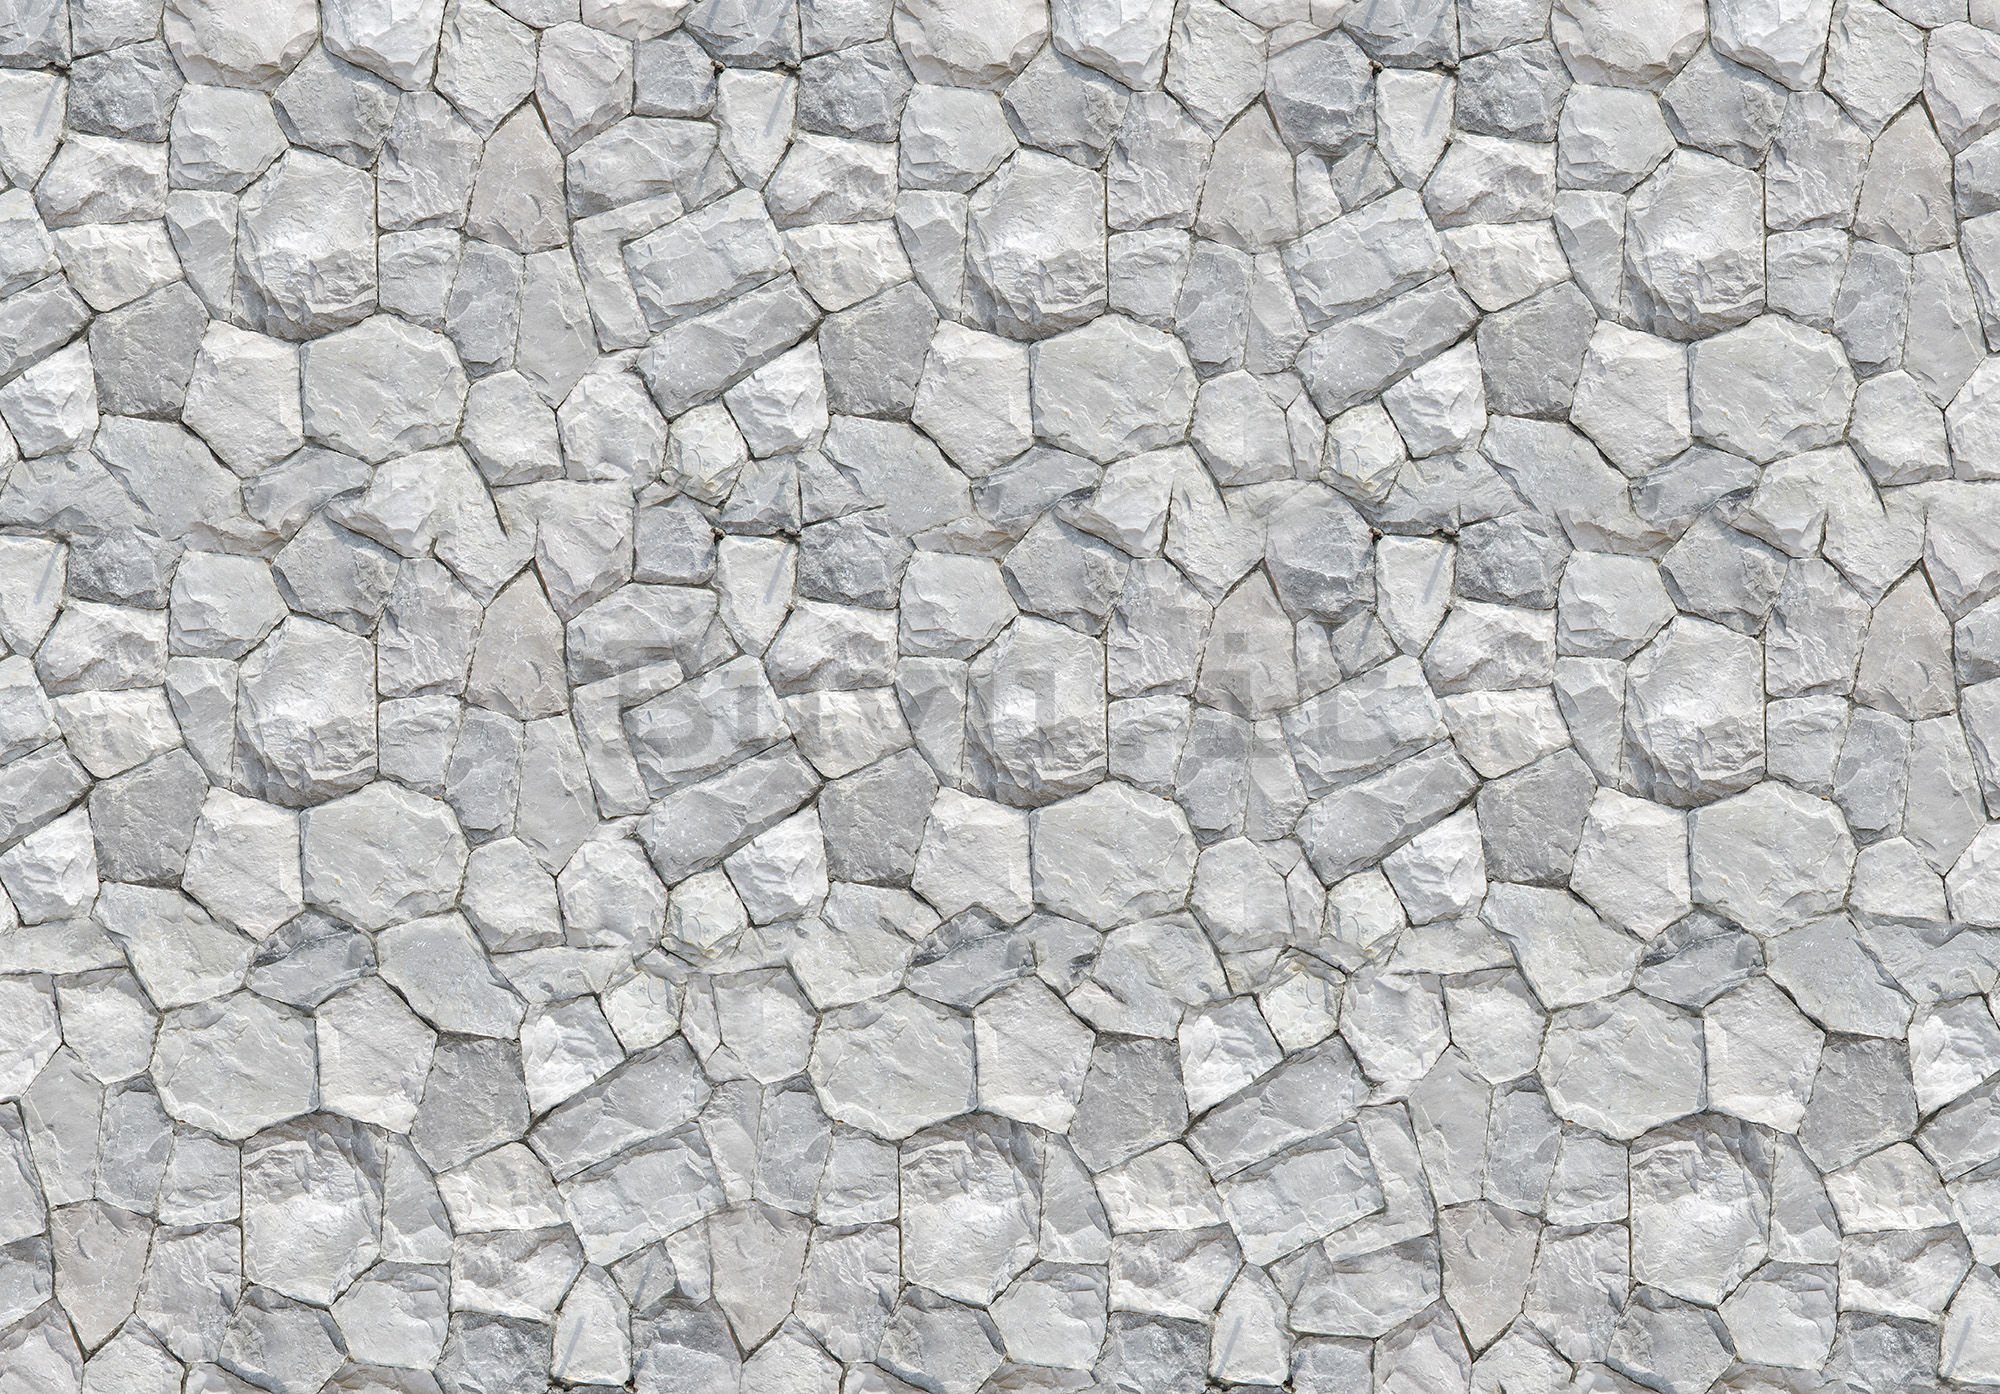 Fotomurale: Muro di pietra (9) - 254x368 cm